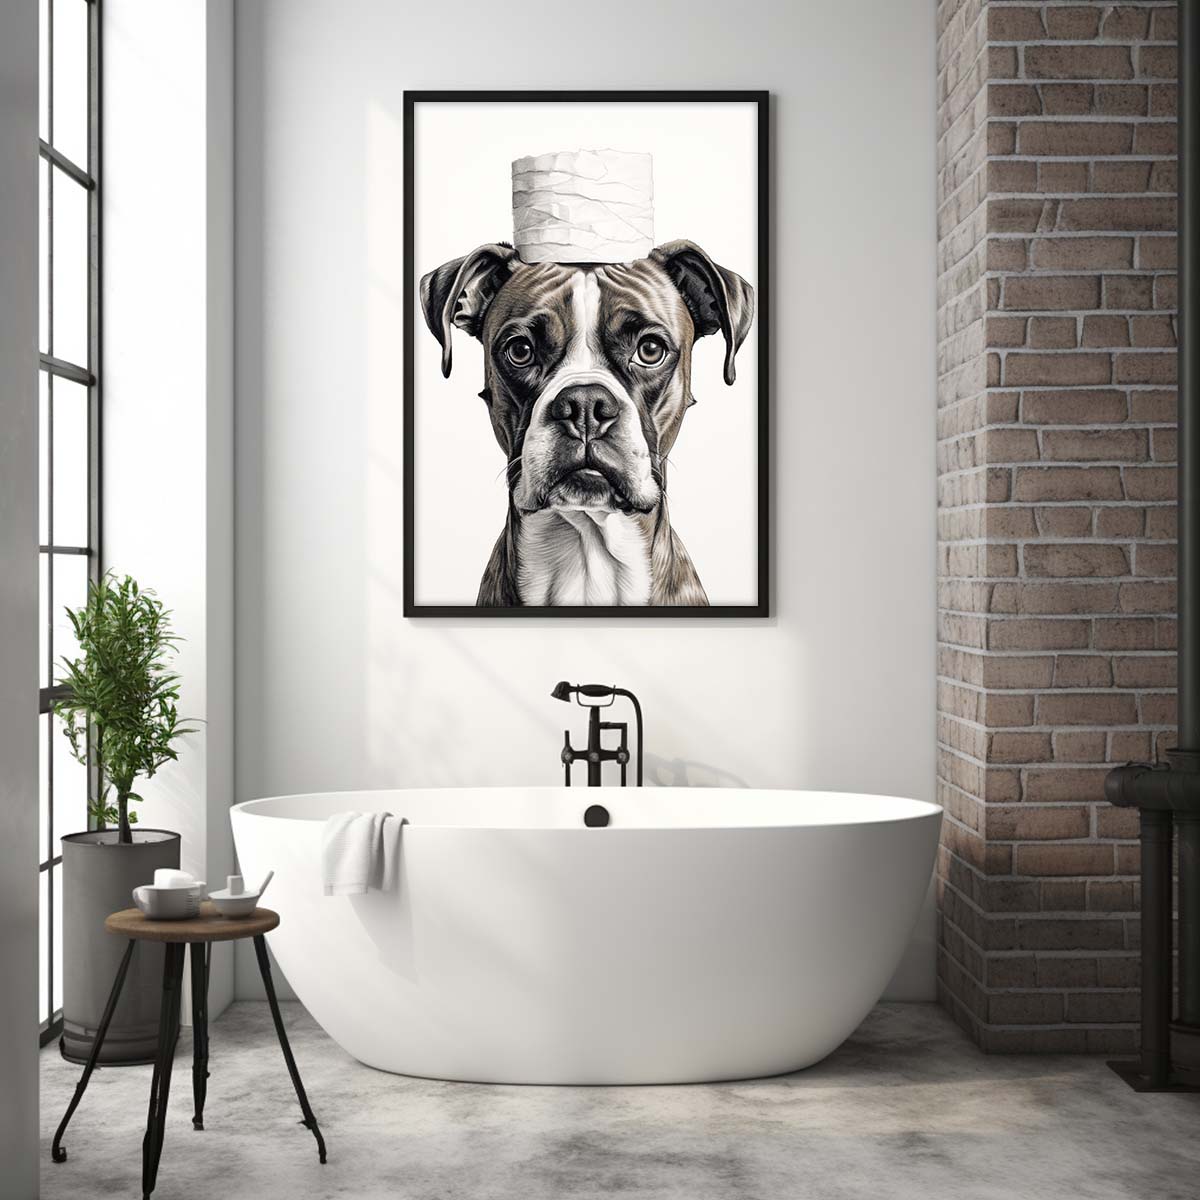 Boxer Dog With Toilet Paper Canvas Art, Boxer Dog With Toilet Paper, Funny Dog Art, Bathroom Wall Decor, Home Decor, Bathroom Wall Art, Dog Wall Decor, Animal Decor, Pet Gift